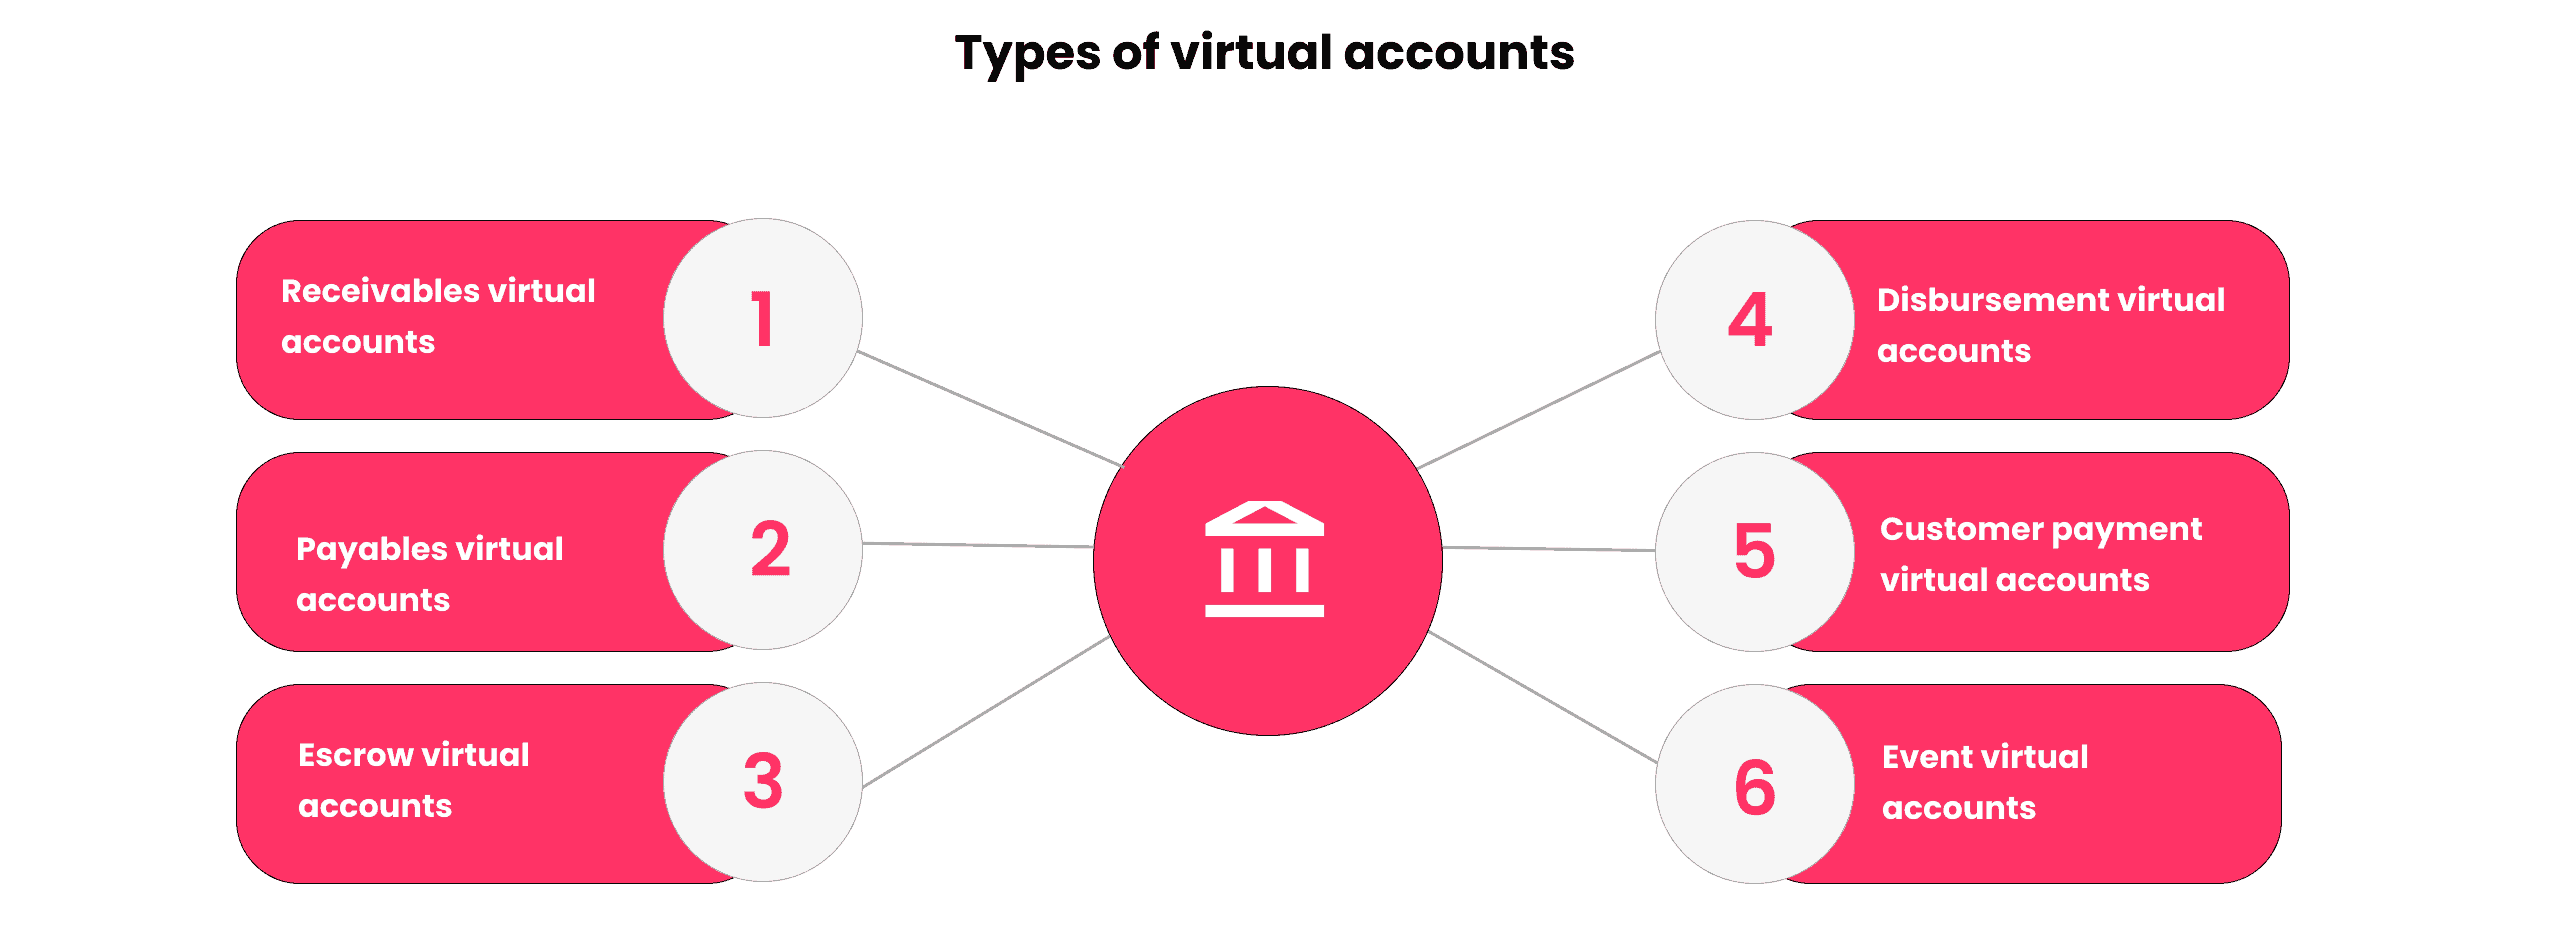 Types of virtual accounts